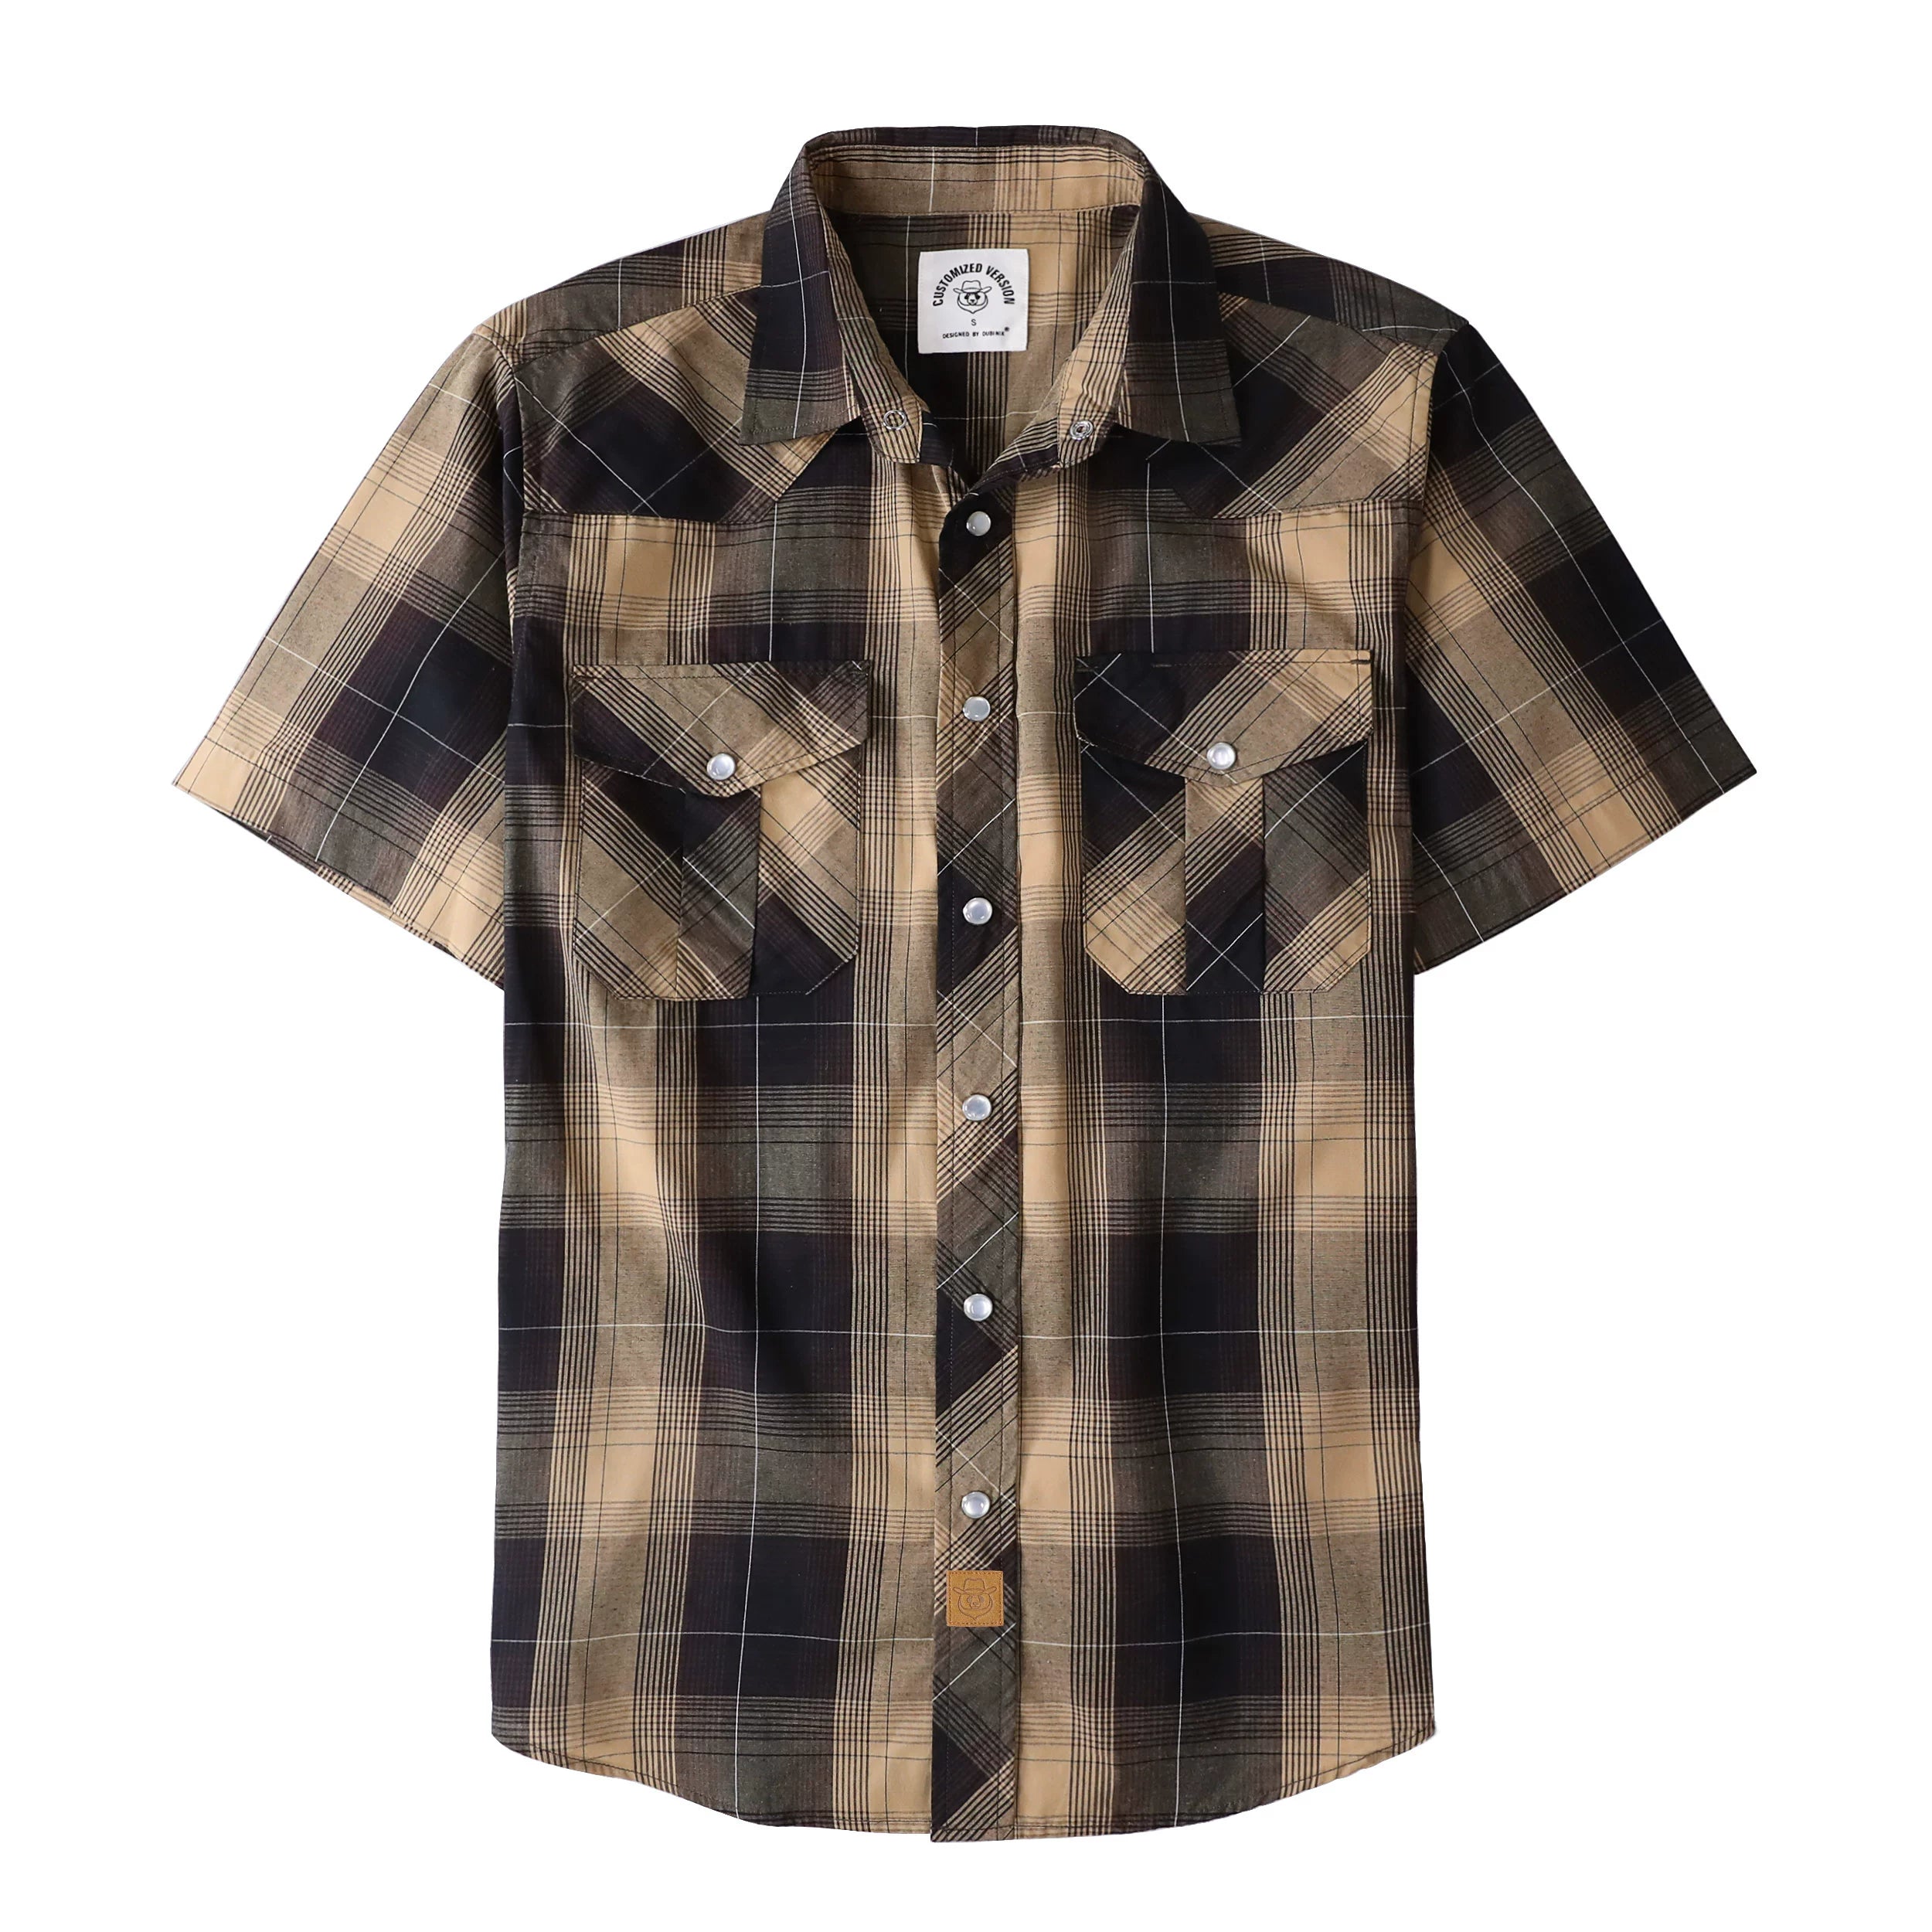 Dubinik® Western Shirts for Men Short Sleeve Plaid Pearl Snap Shirts for Men Button Up Shirt Cowboy Casual Work Shirt#41027